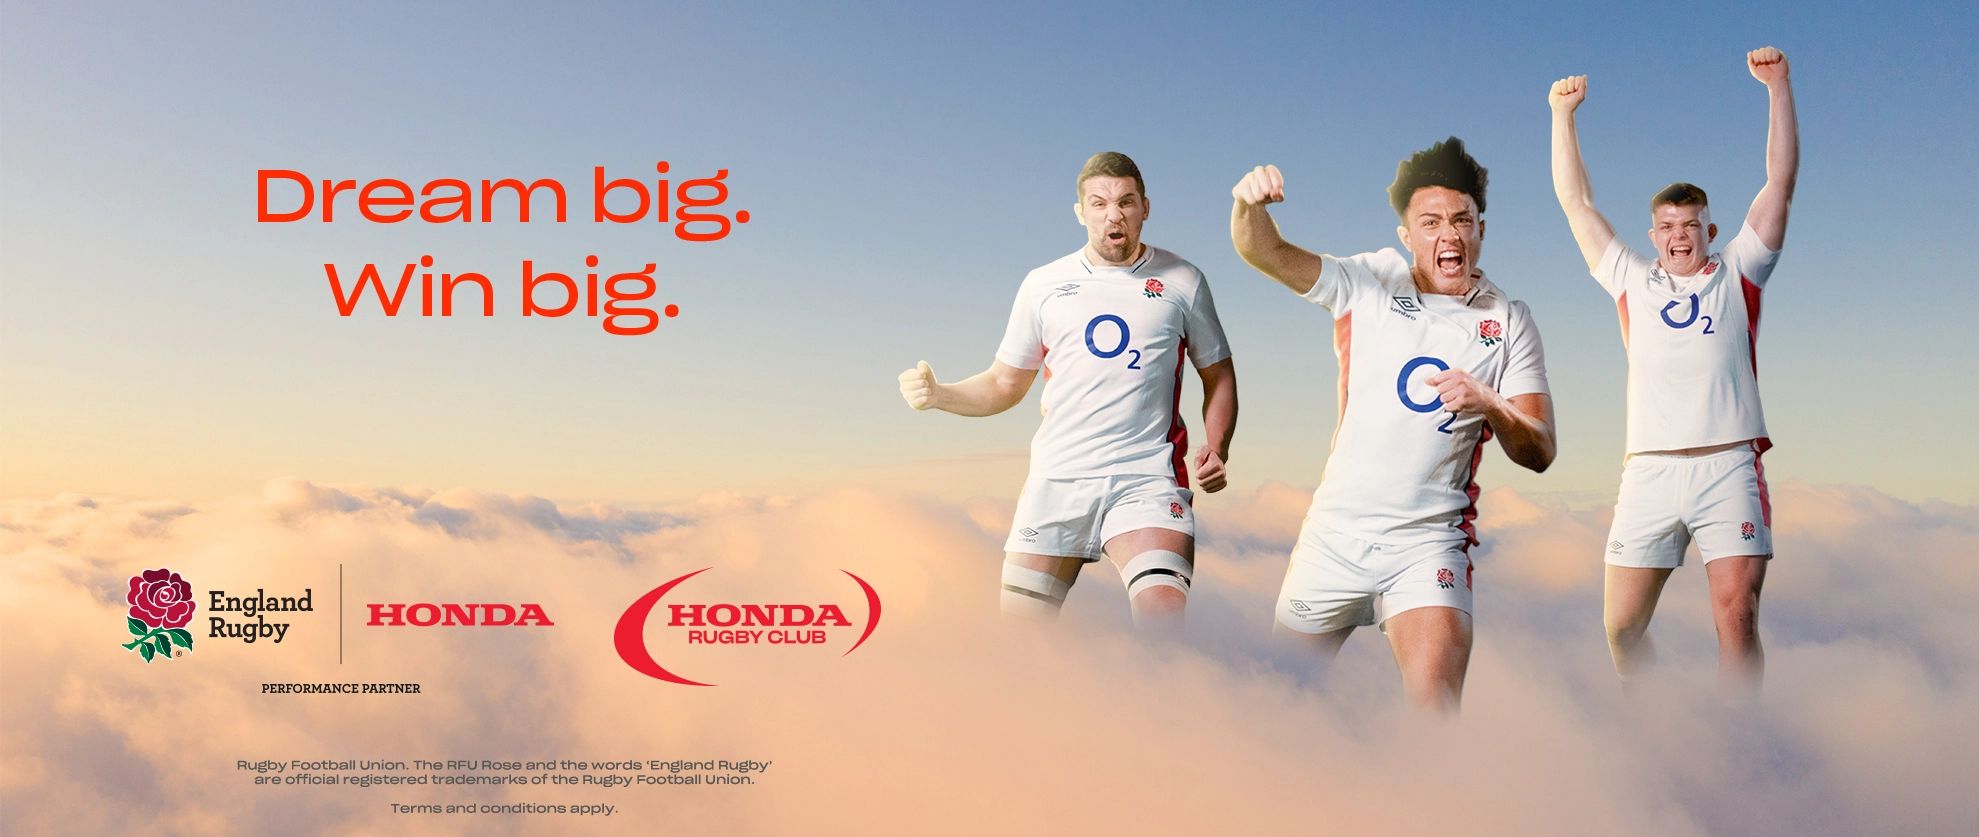 Honda Rugby Club image